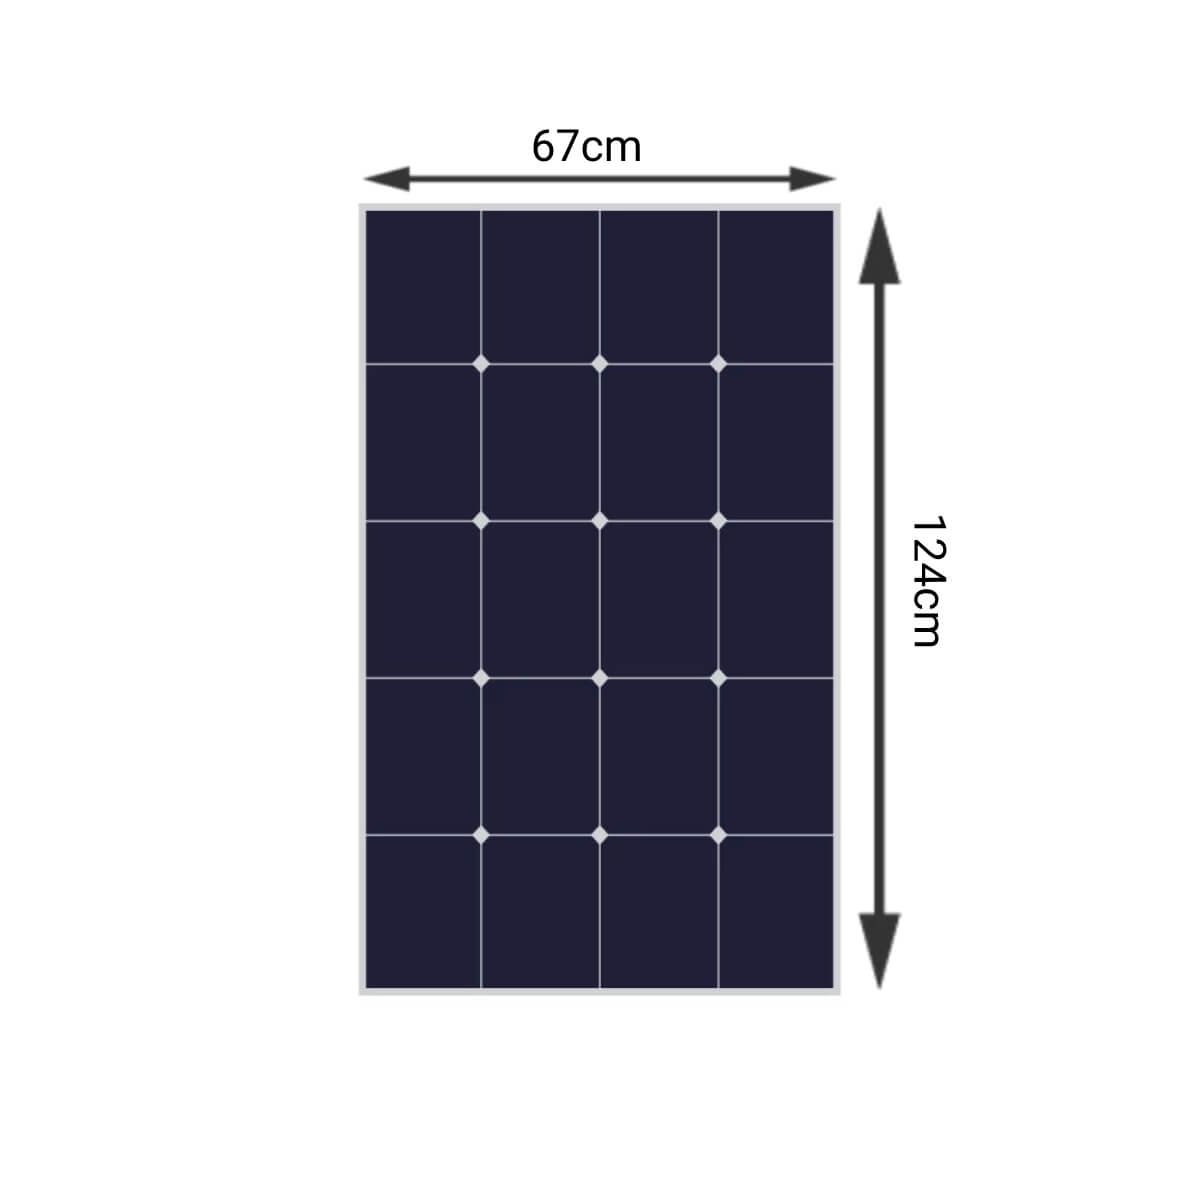 450W Solar Panel Kit – 3x 150W dimensions